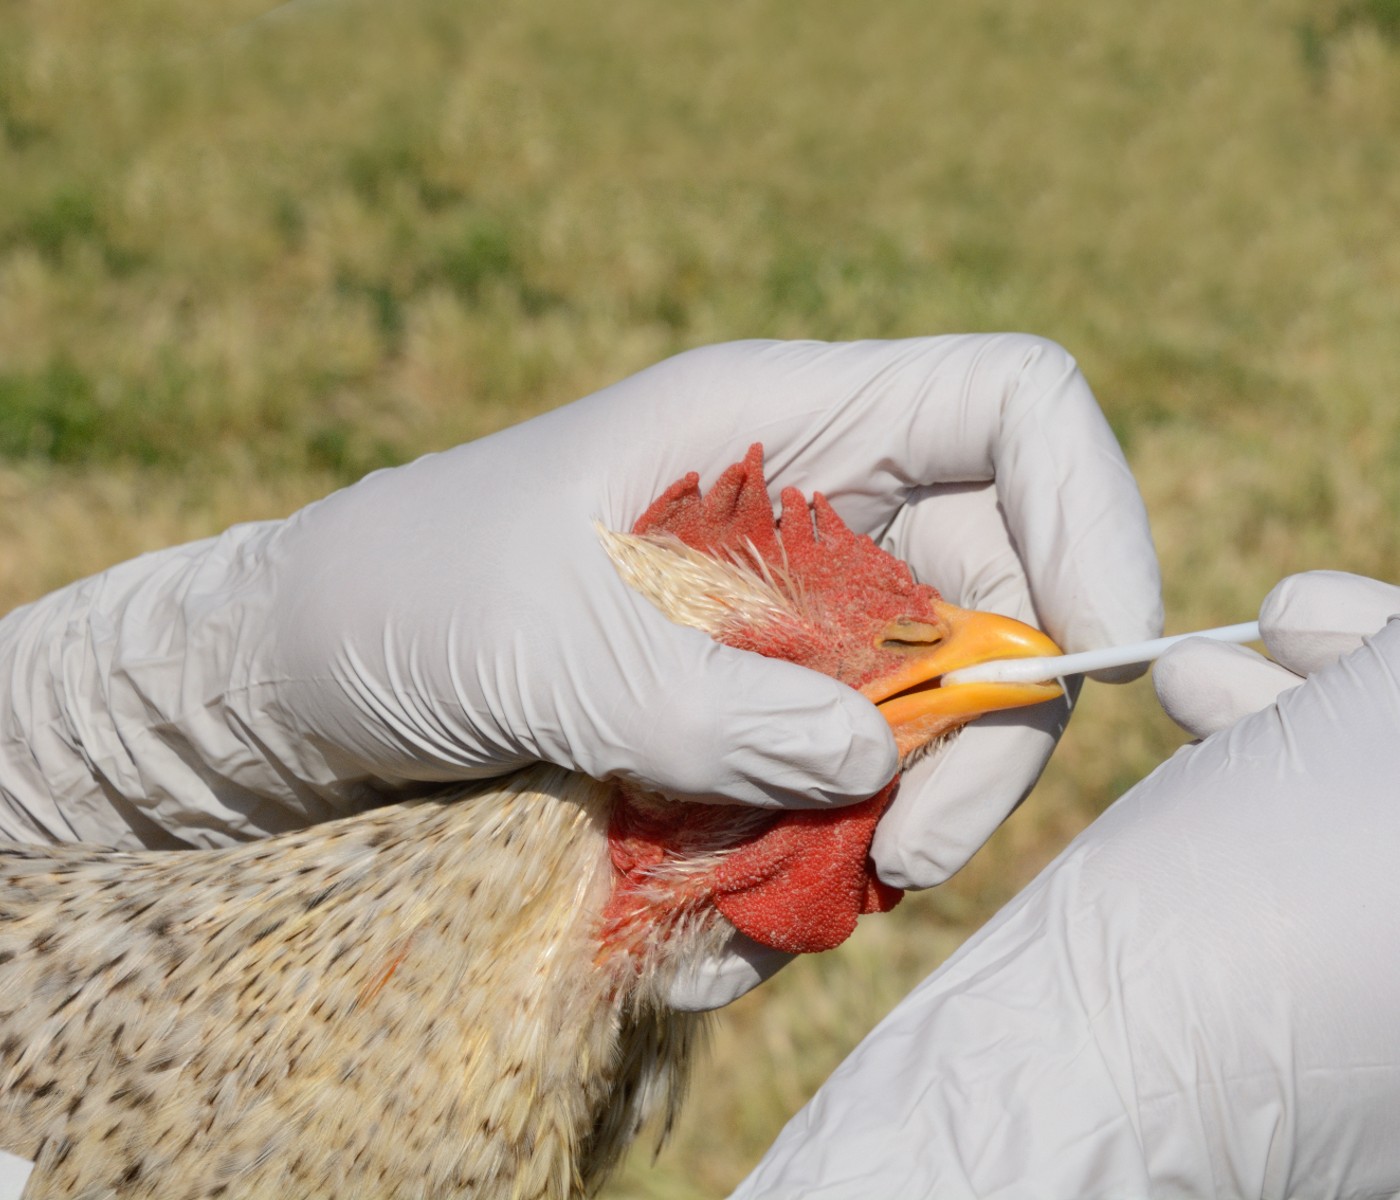 Ecuador declara Emergencia Sanitaria por Influenza Aviar: 180.000 aves sacrificadas